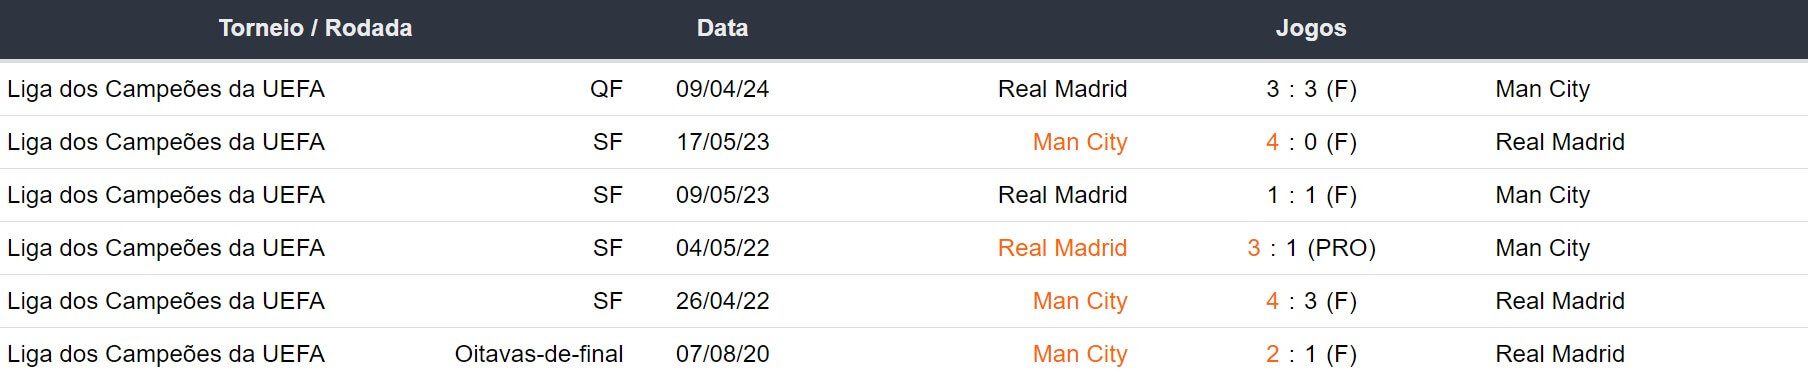 Ultimos encontros Man. City x Real Madrid 170424